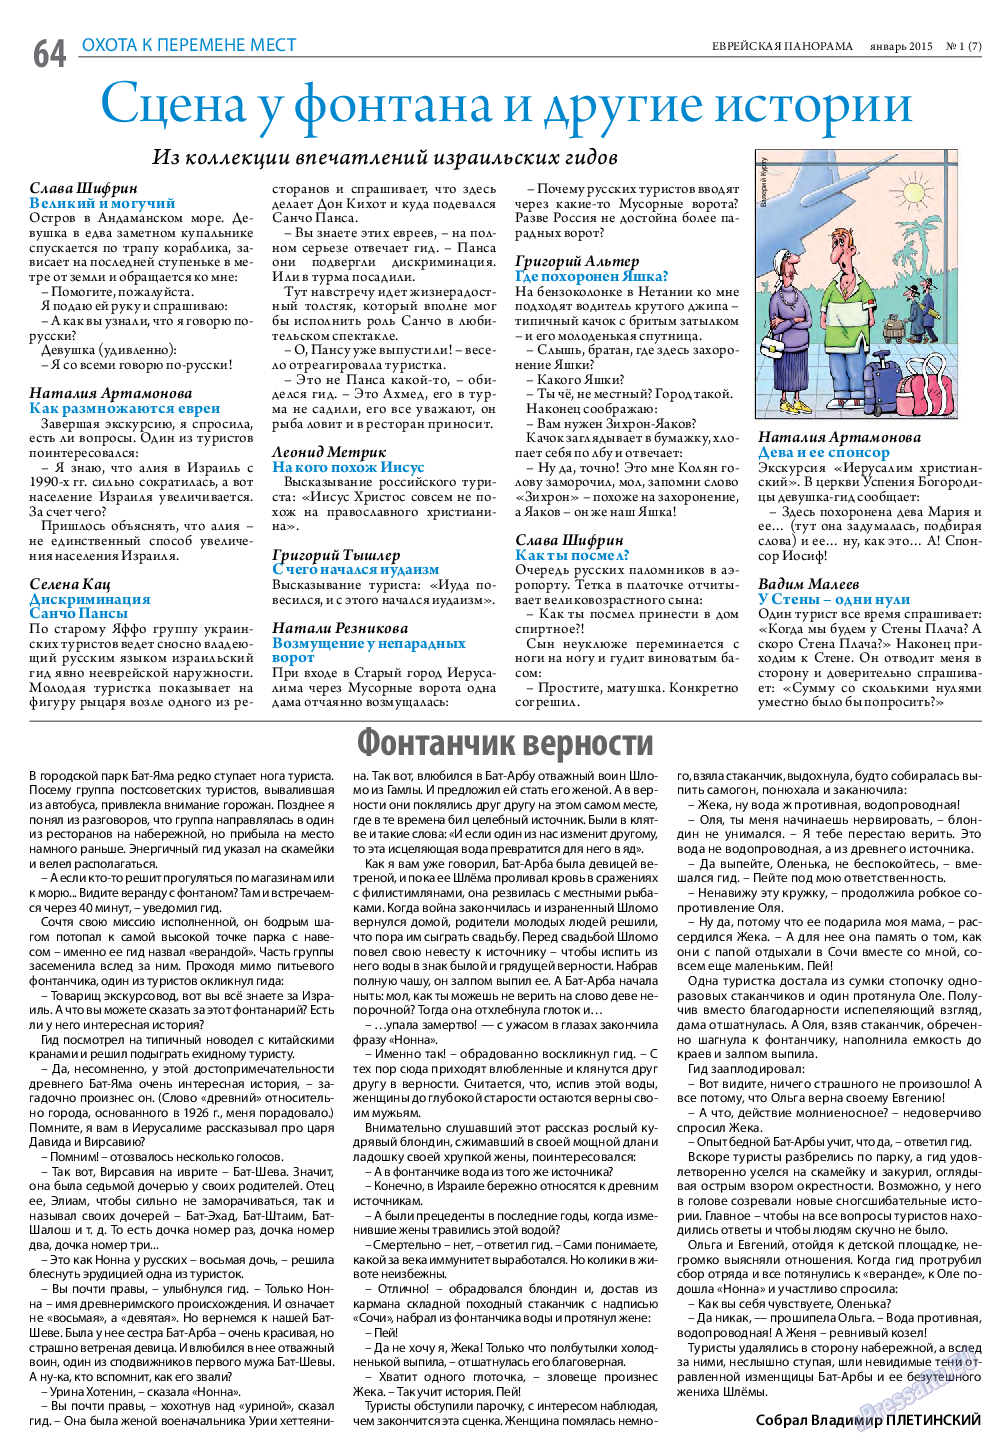 Еврейская панорама, газета. 2015 №1 стр.64